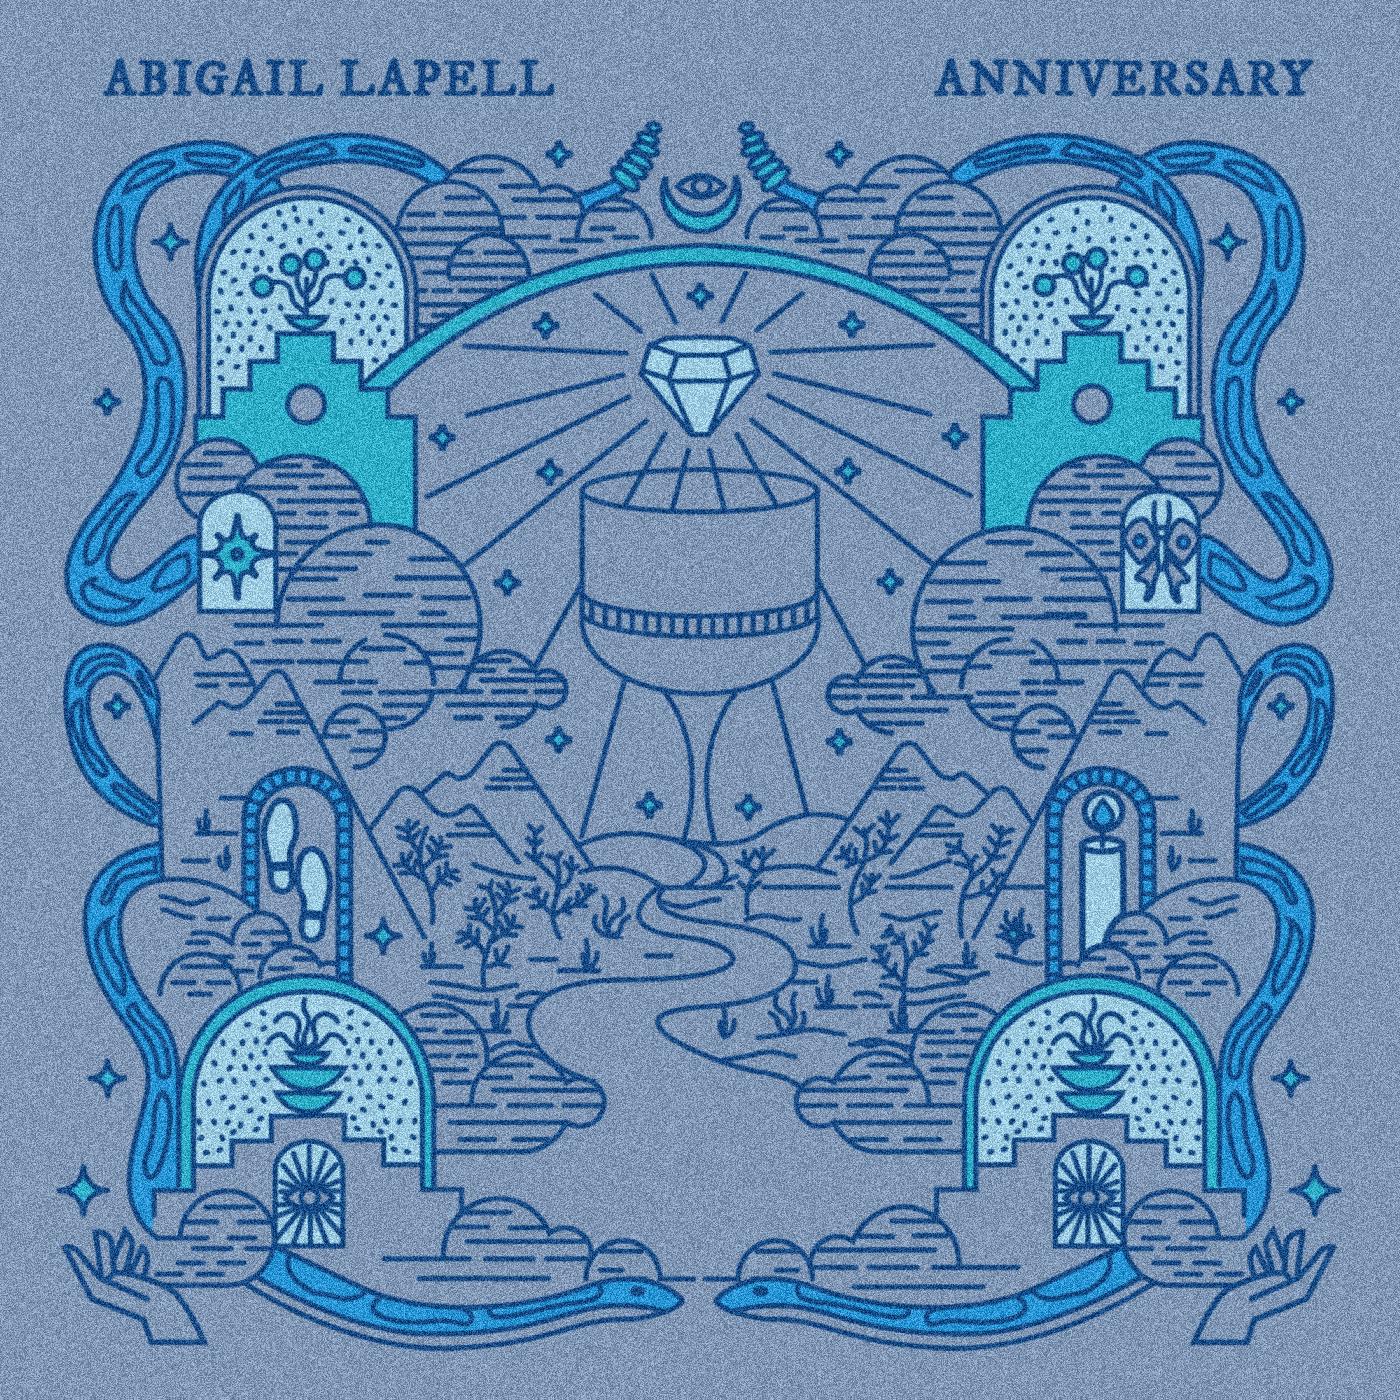 Abigail Lapell - Anniversary (AQUA BLUE VINYL)